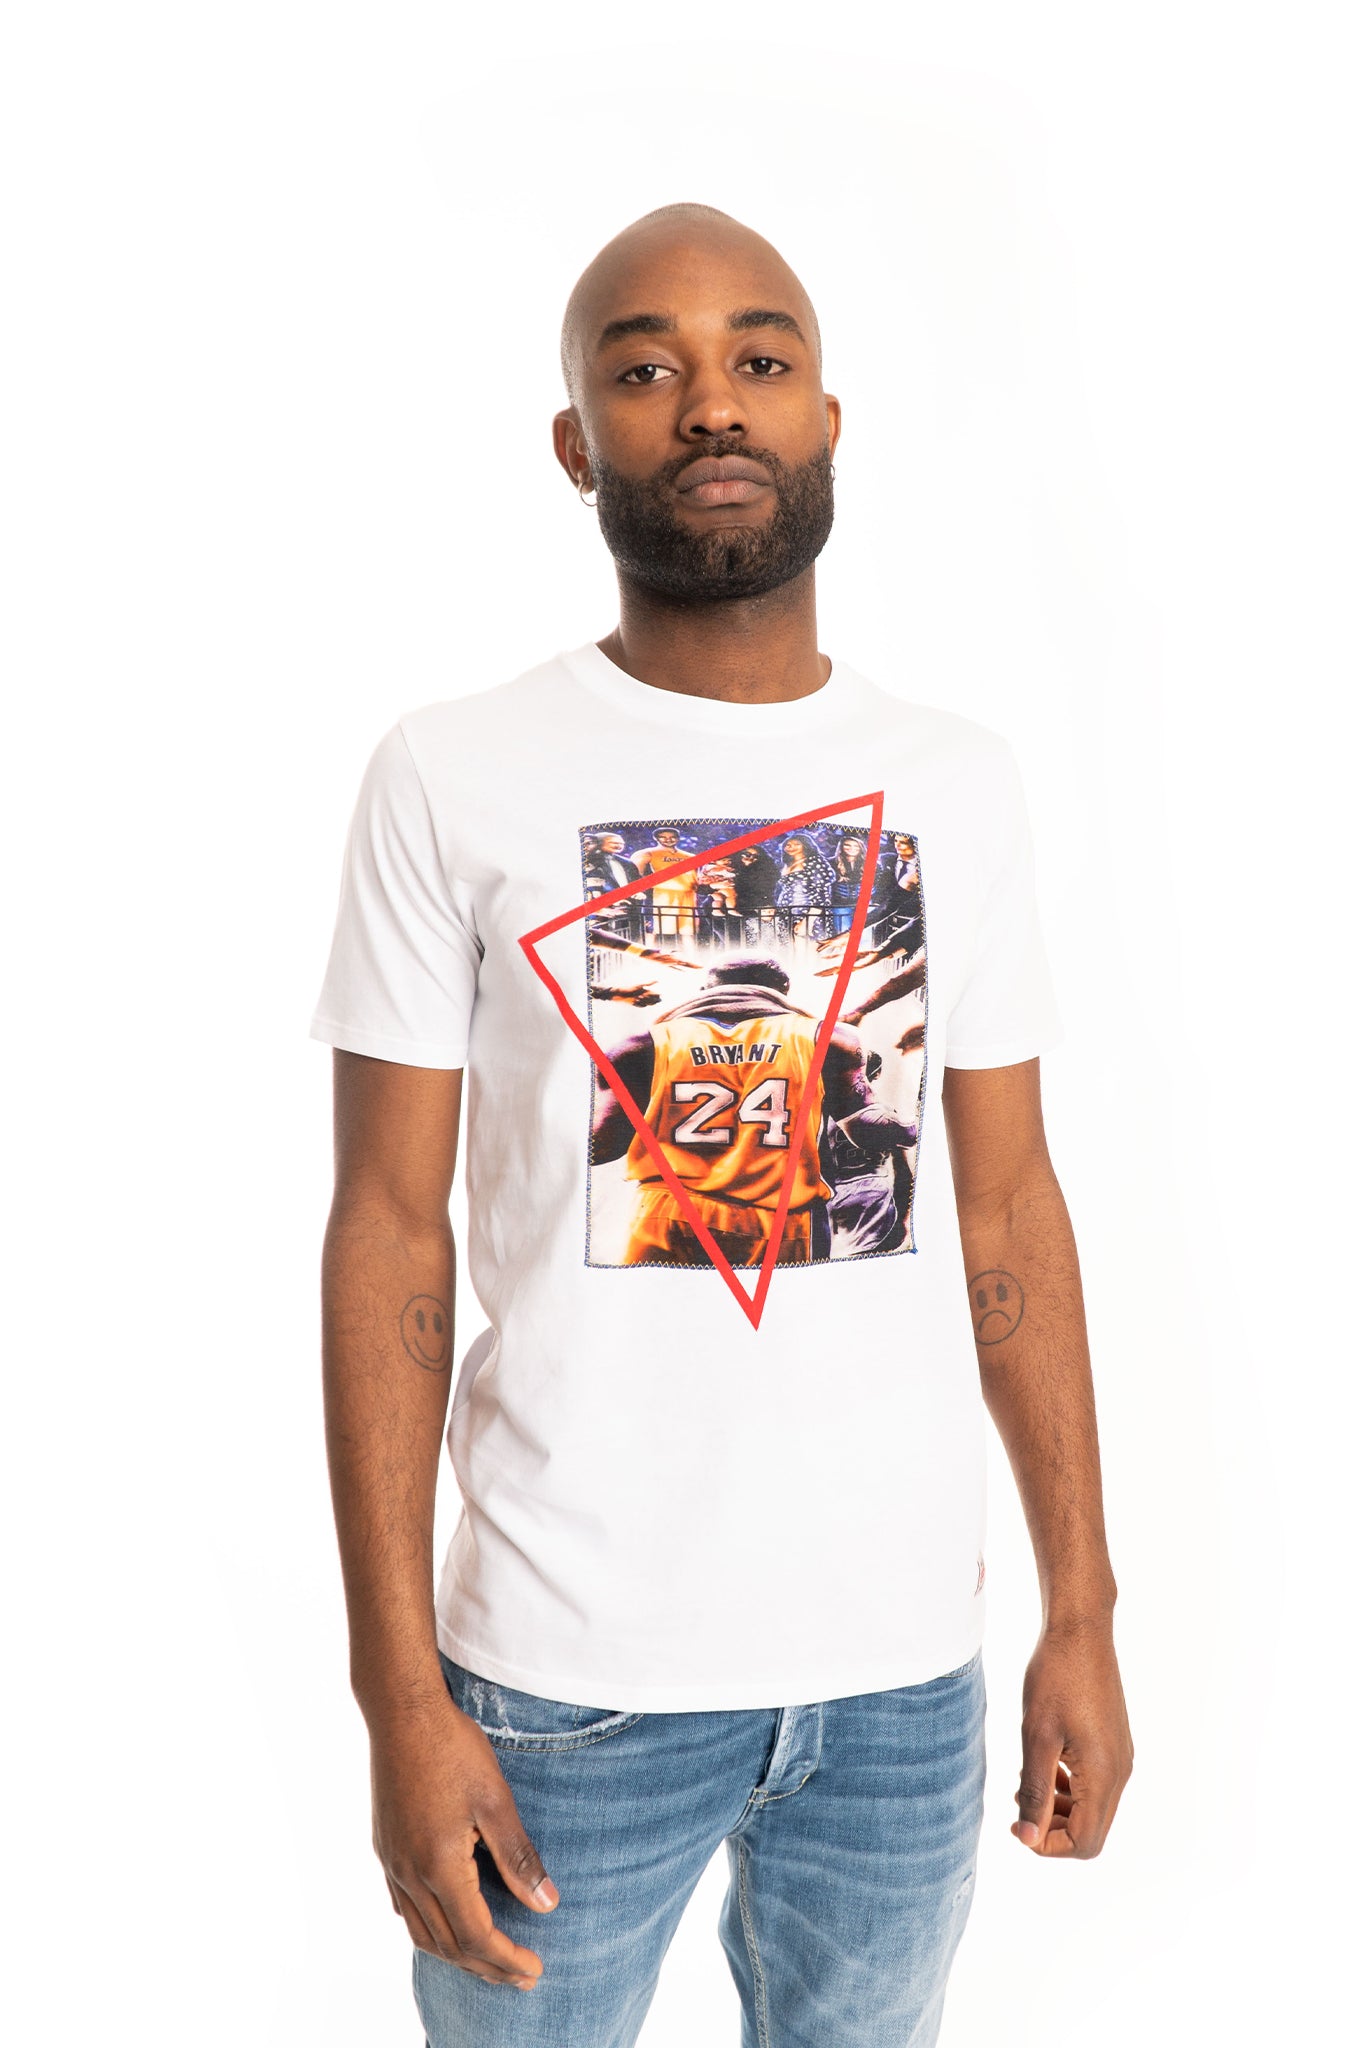 Bob Company - T-shirt Bianca con Stampa Kobe Bryant